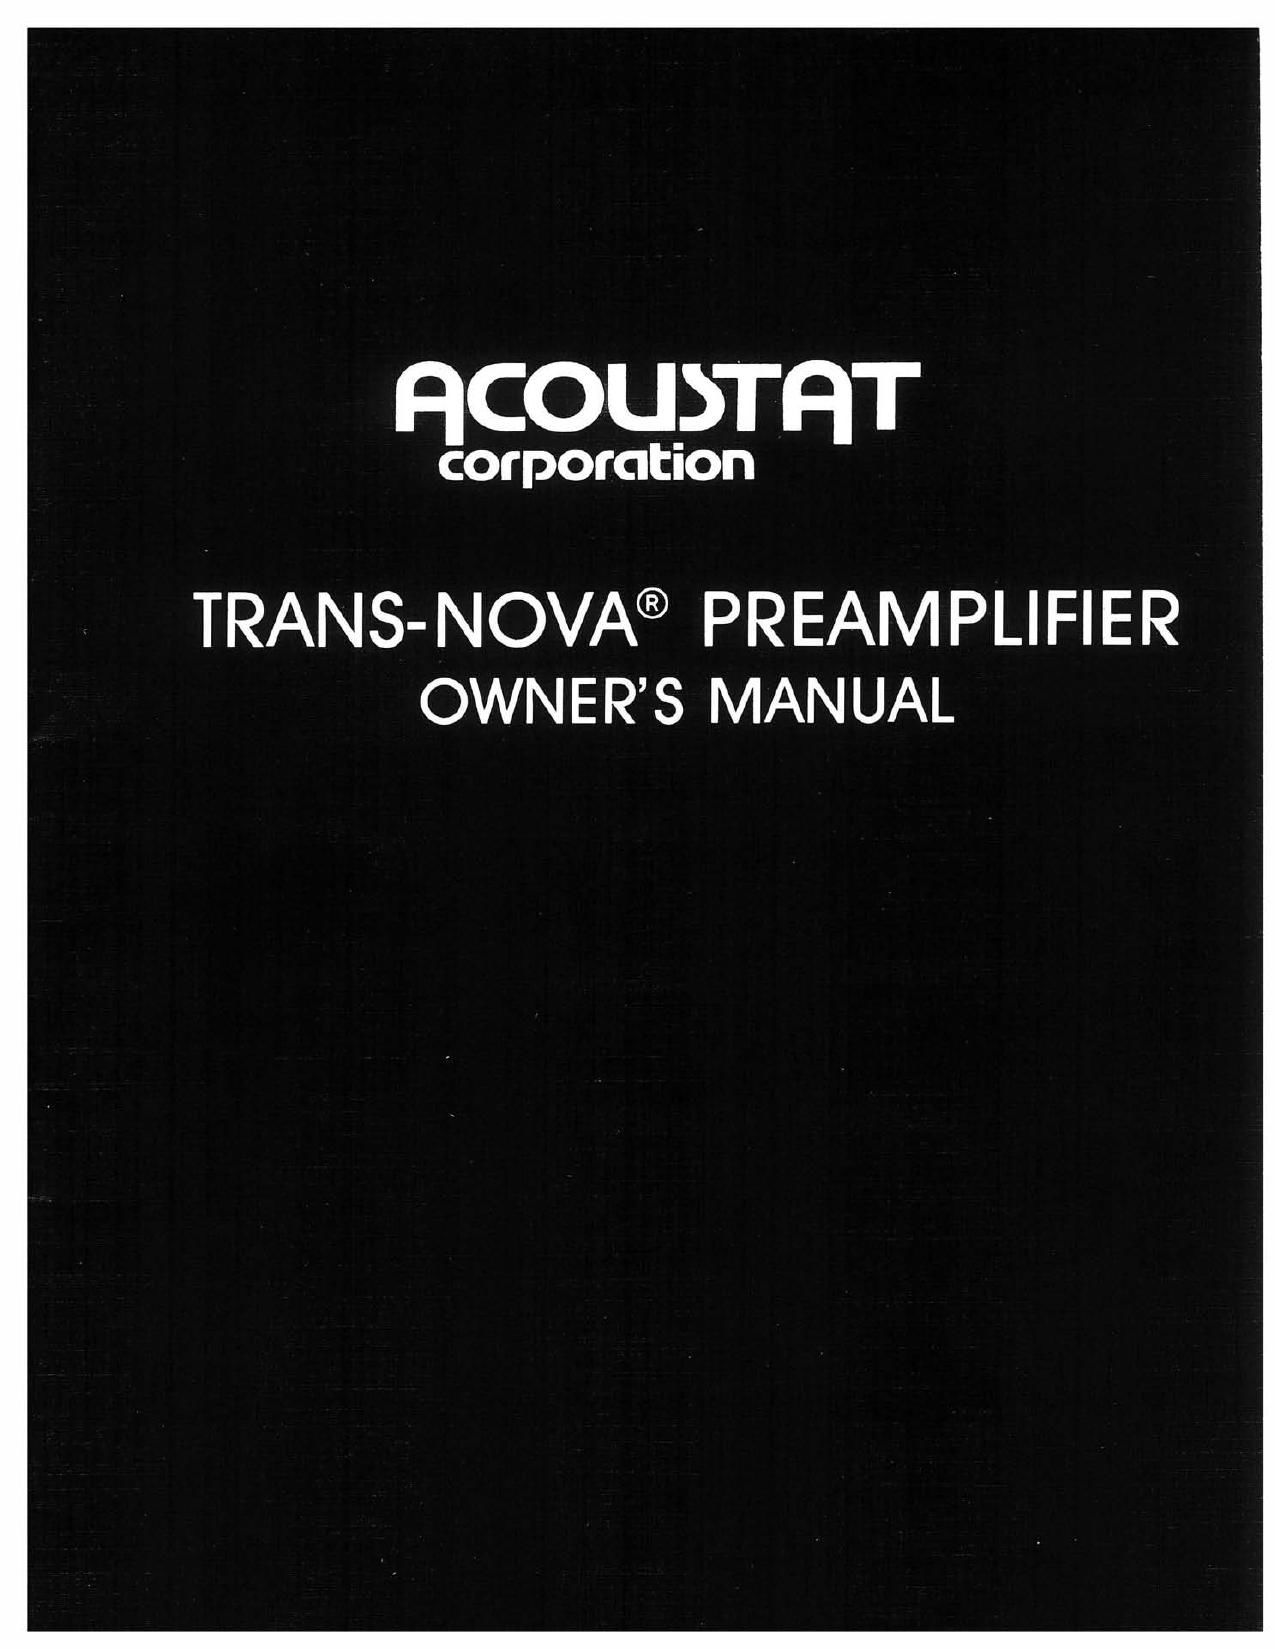 Acoustat Trans Nova Owners Manual